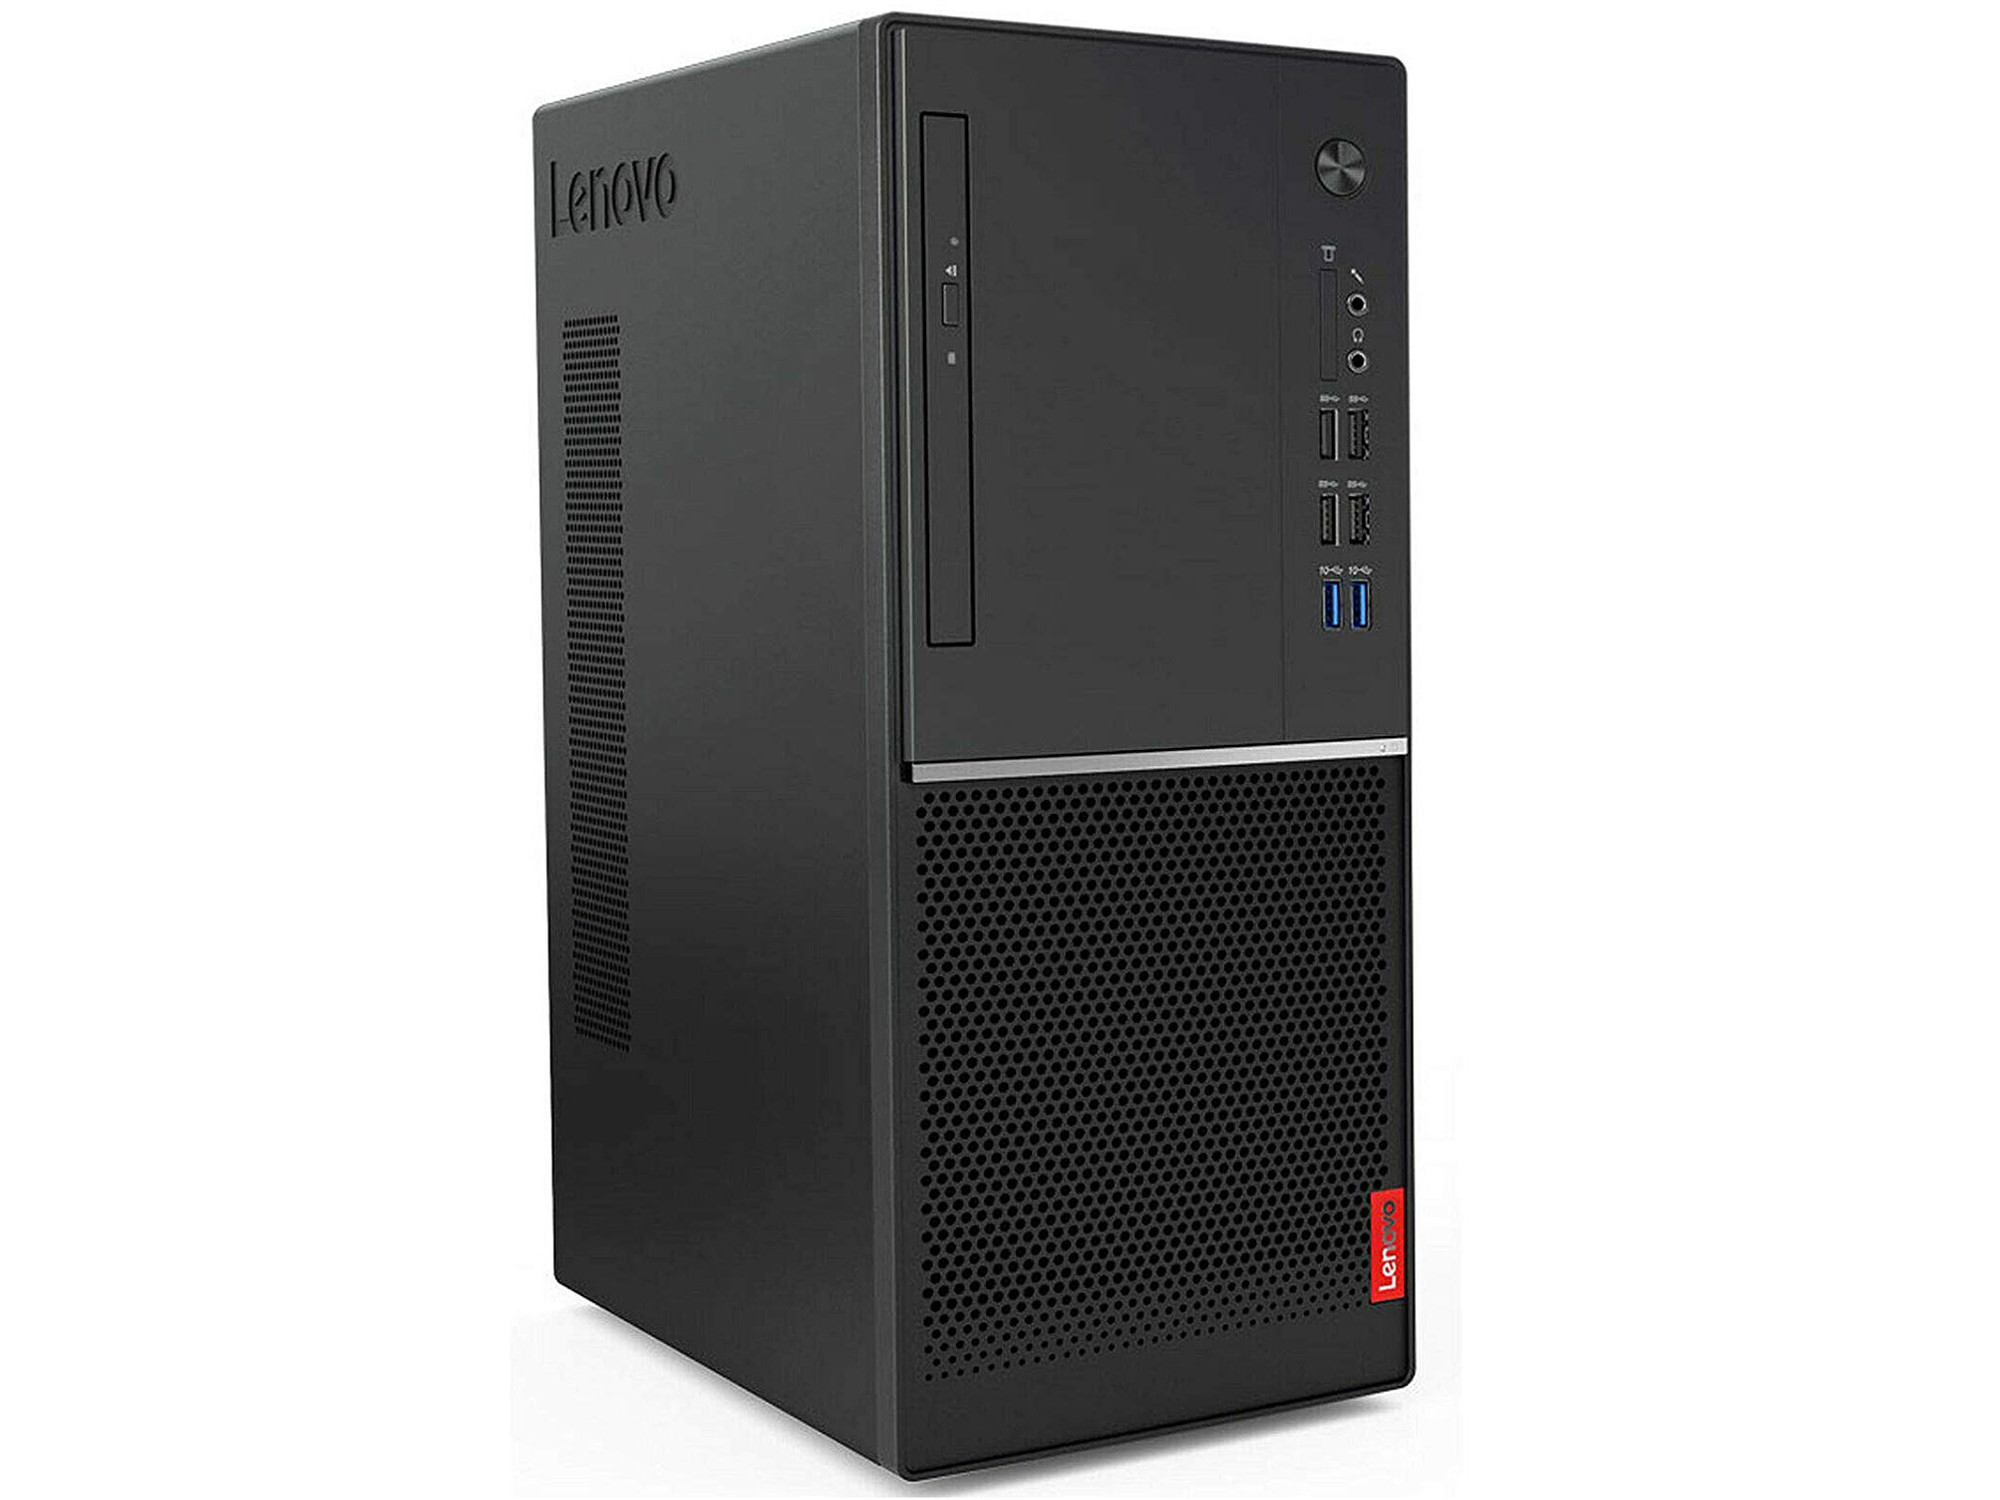 Lenovo V530 Desktop Desktop Tower Computer, Intel Core i3, 16GB RAM, 1TB HD & 512GB SSD, Windows 10, Black, V530UKi391-165121P - image 2 of 5